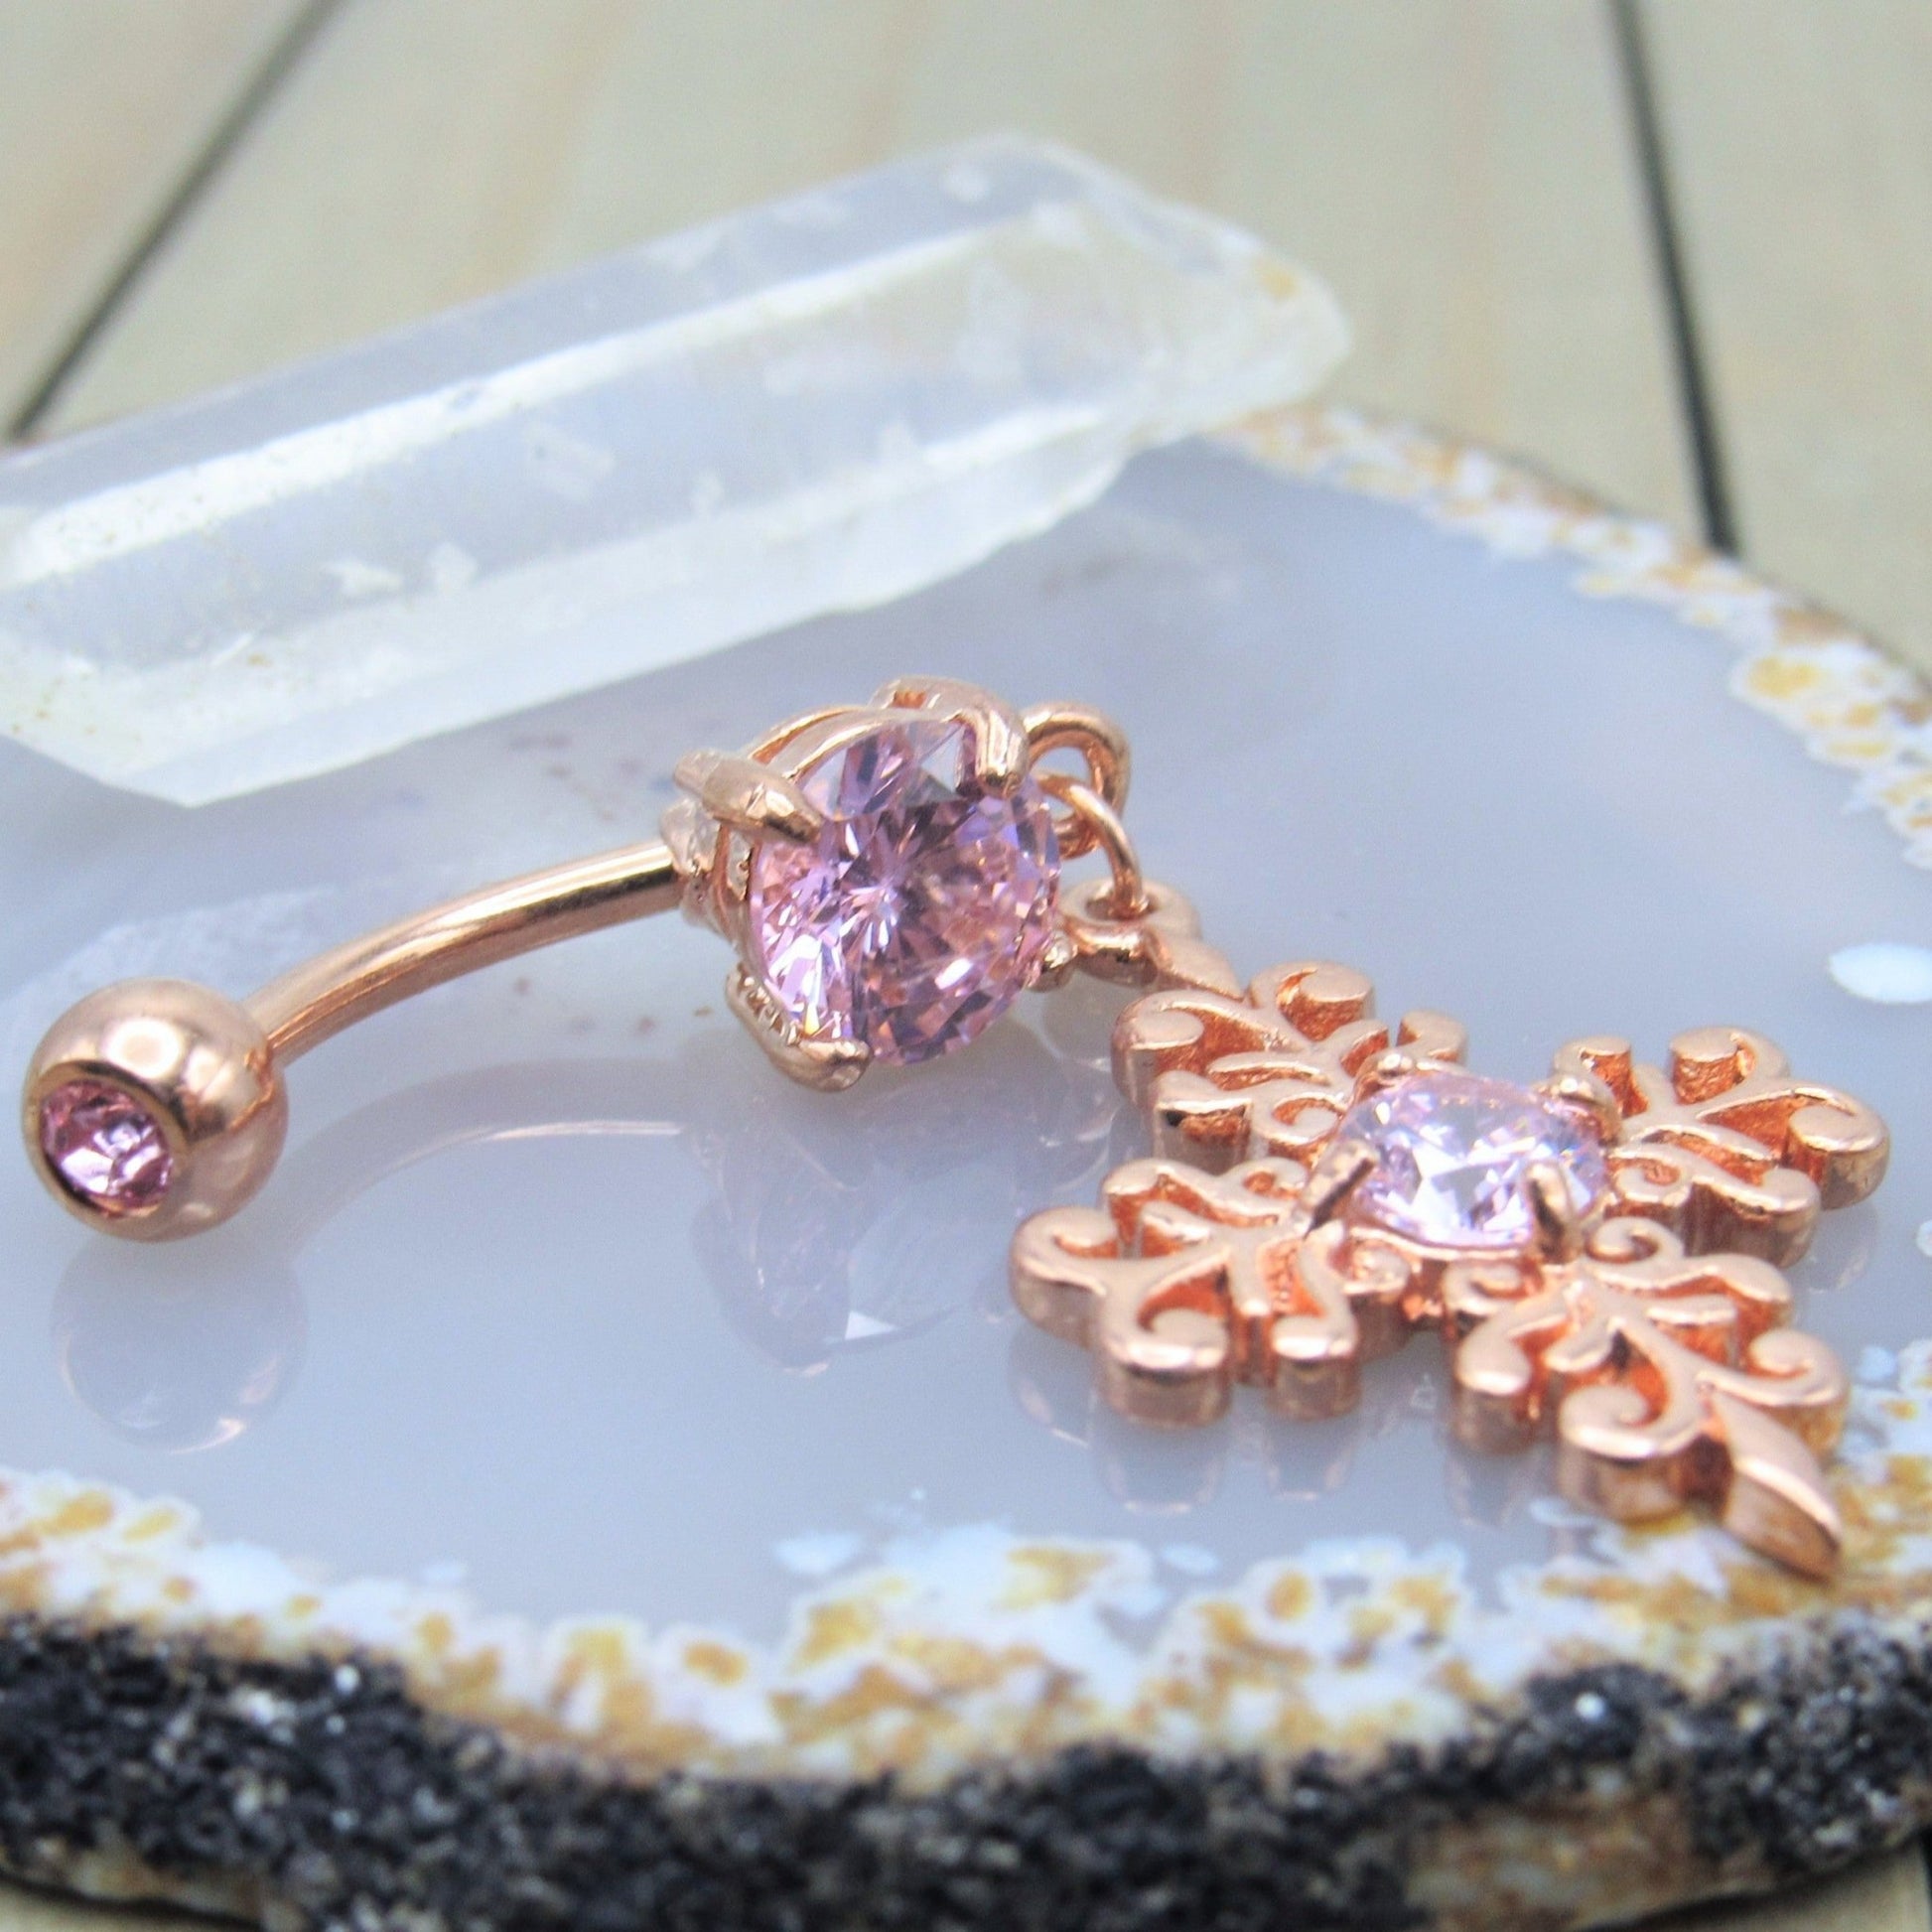 Rose Gold Cross Gemstone Belly Button Piercing Ring 14g 7/16 Pink Gems